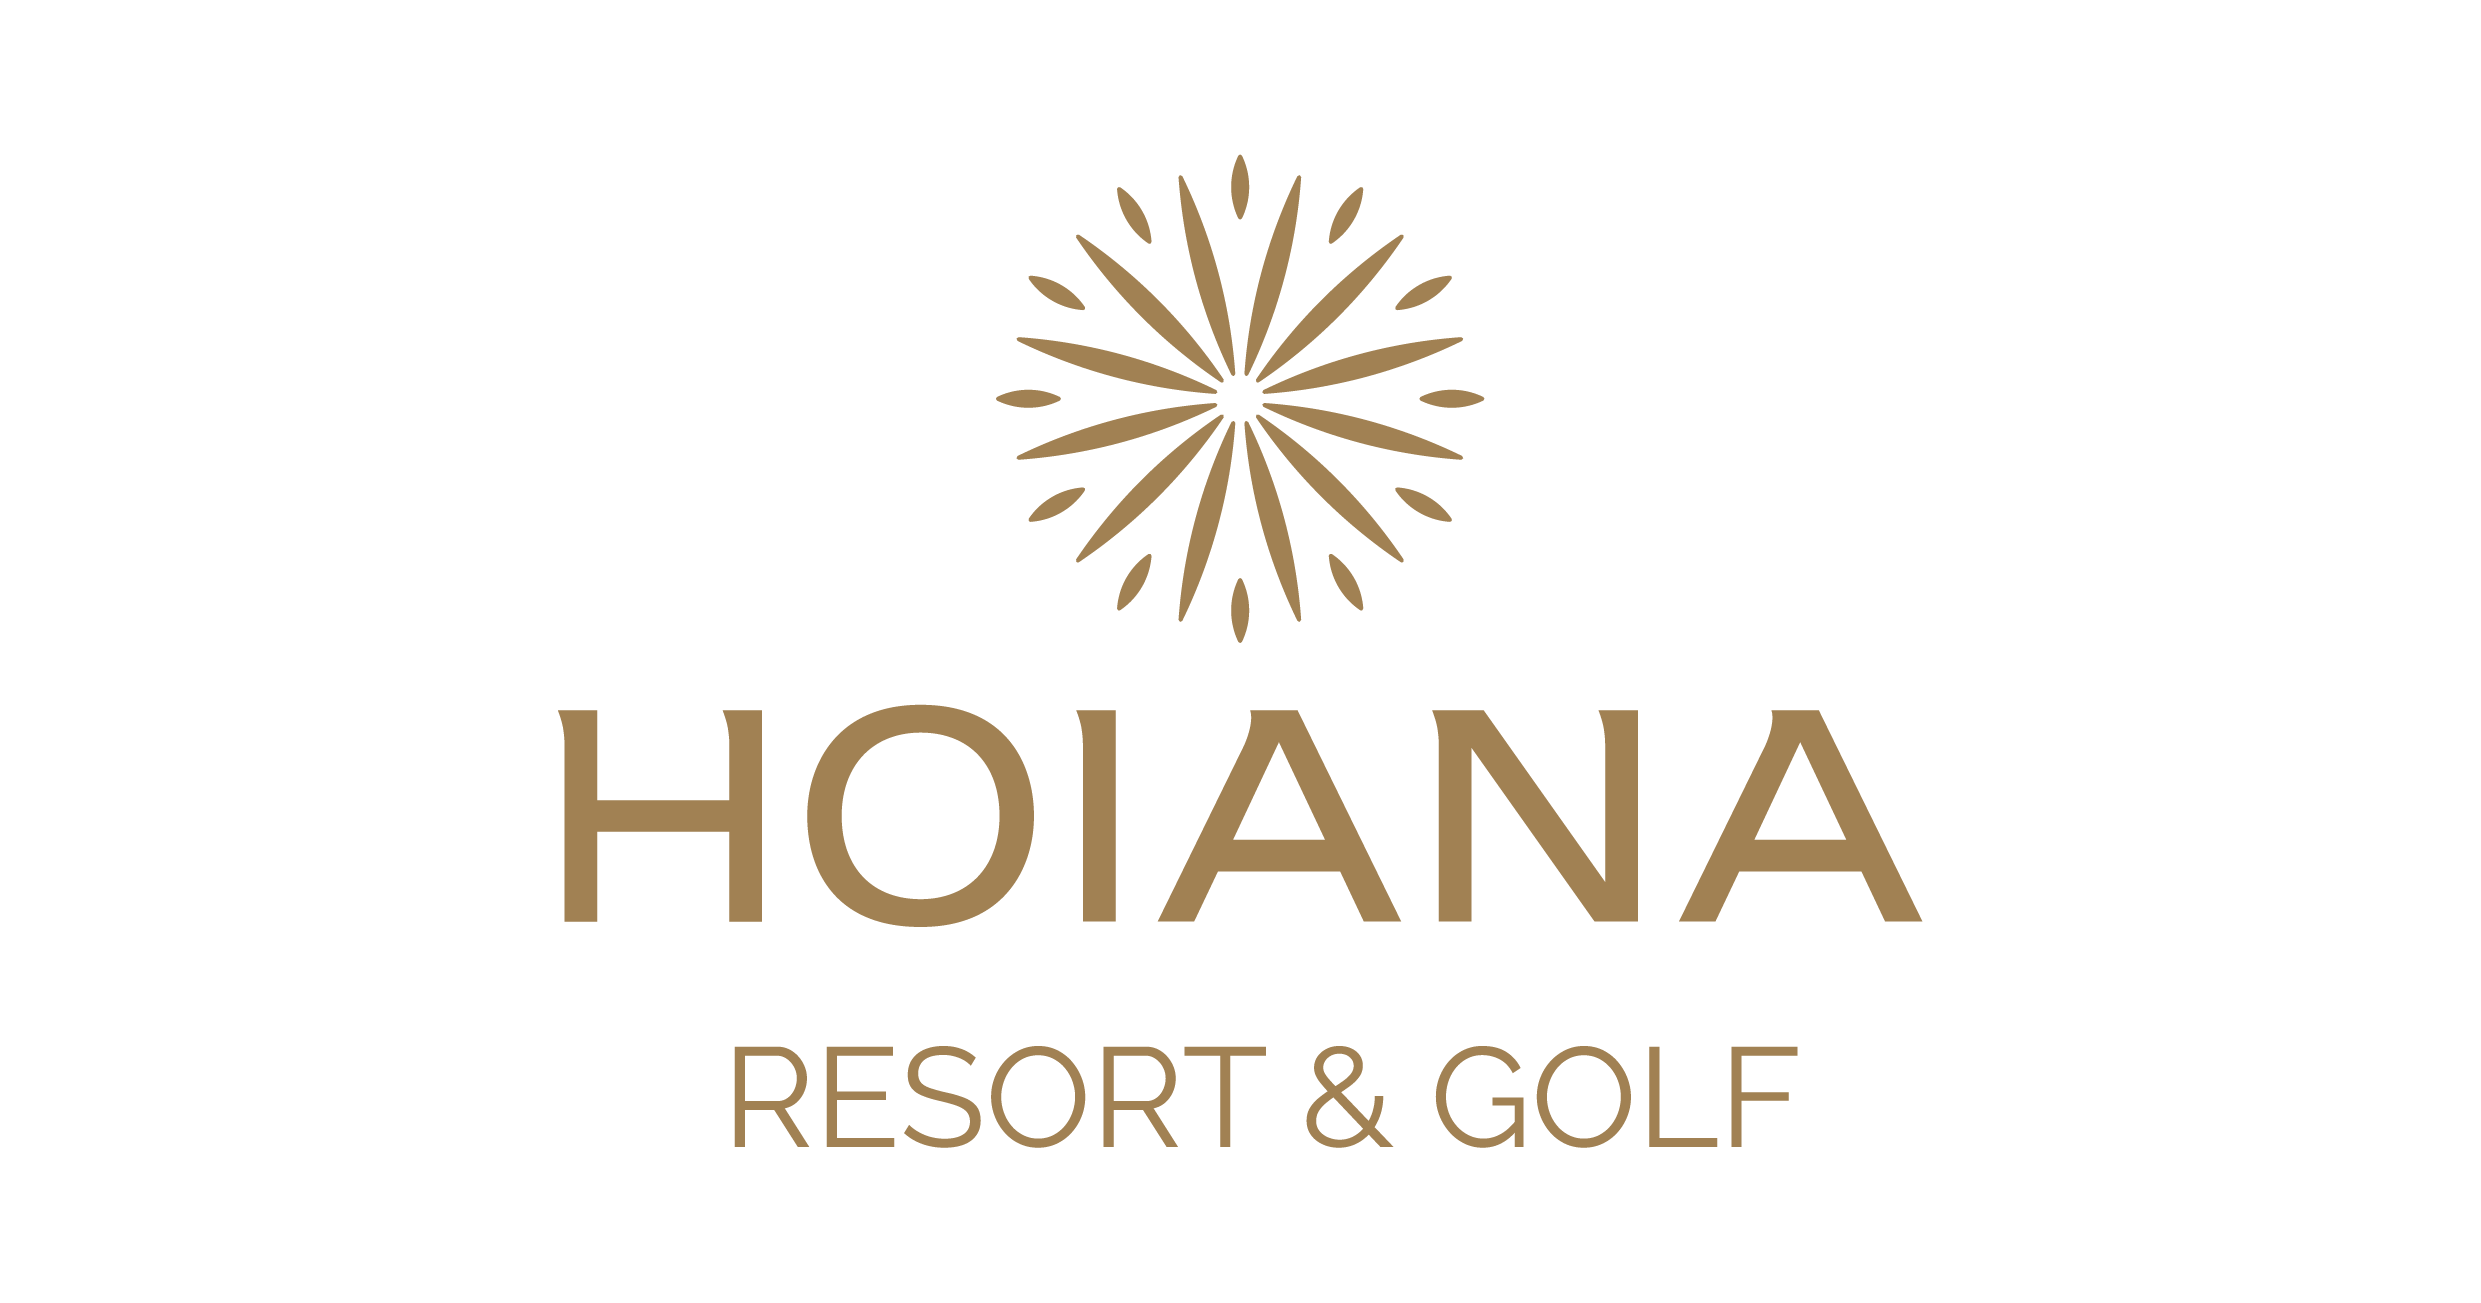 Hoiana Resort and Golf.png